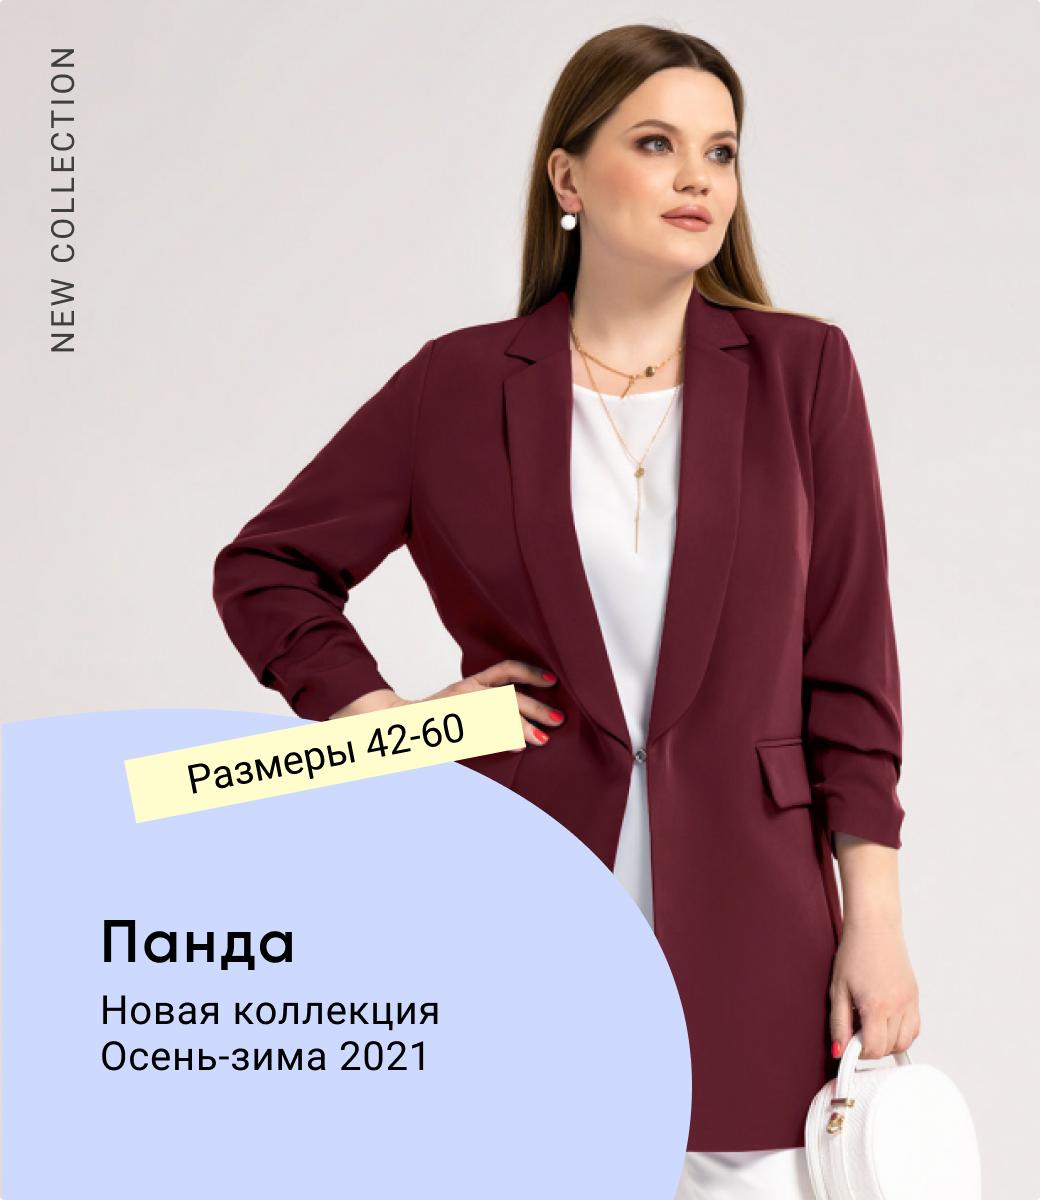 Монро24 By Интернет Магазин Белорусской